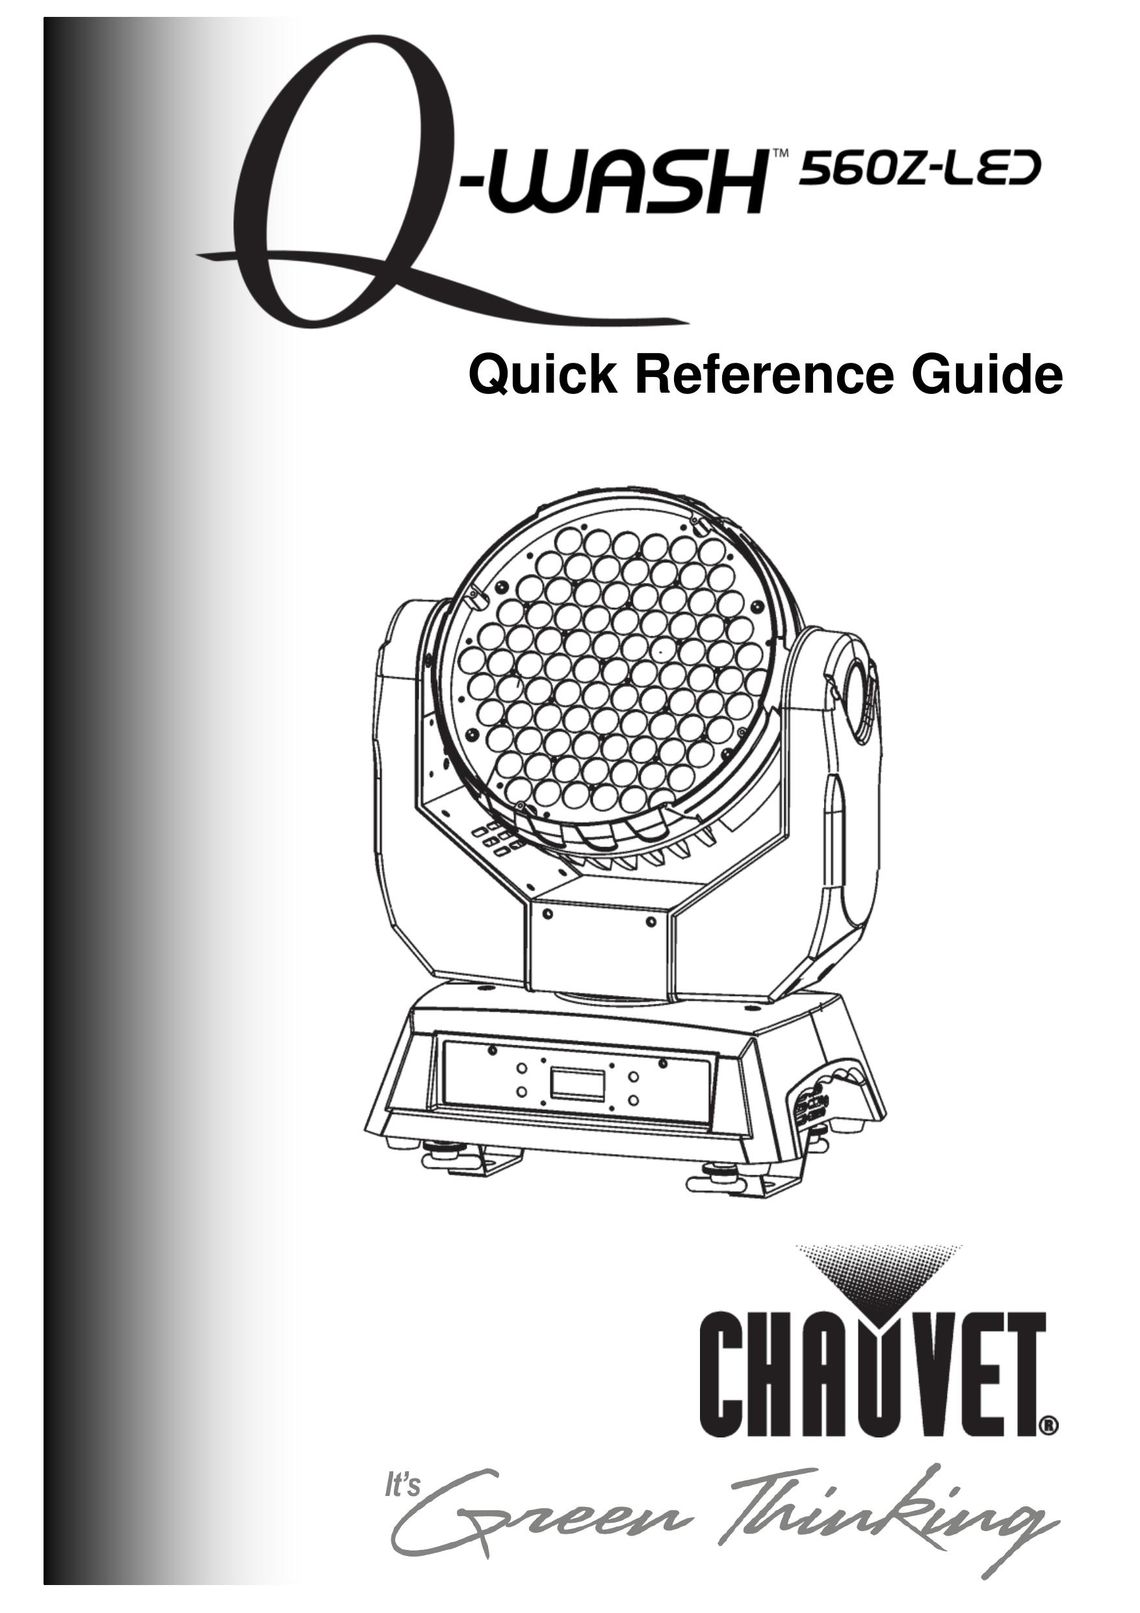 Chauvet 560Z-LED All in One Printer User Manual